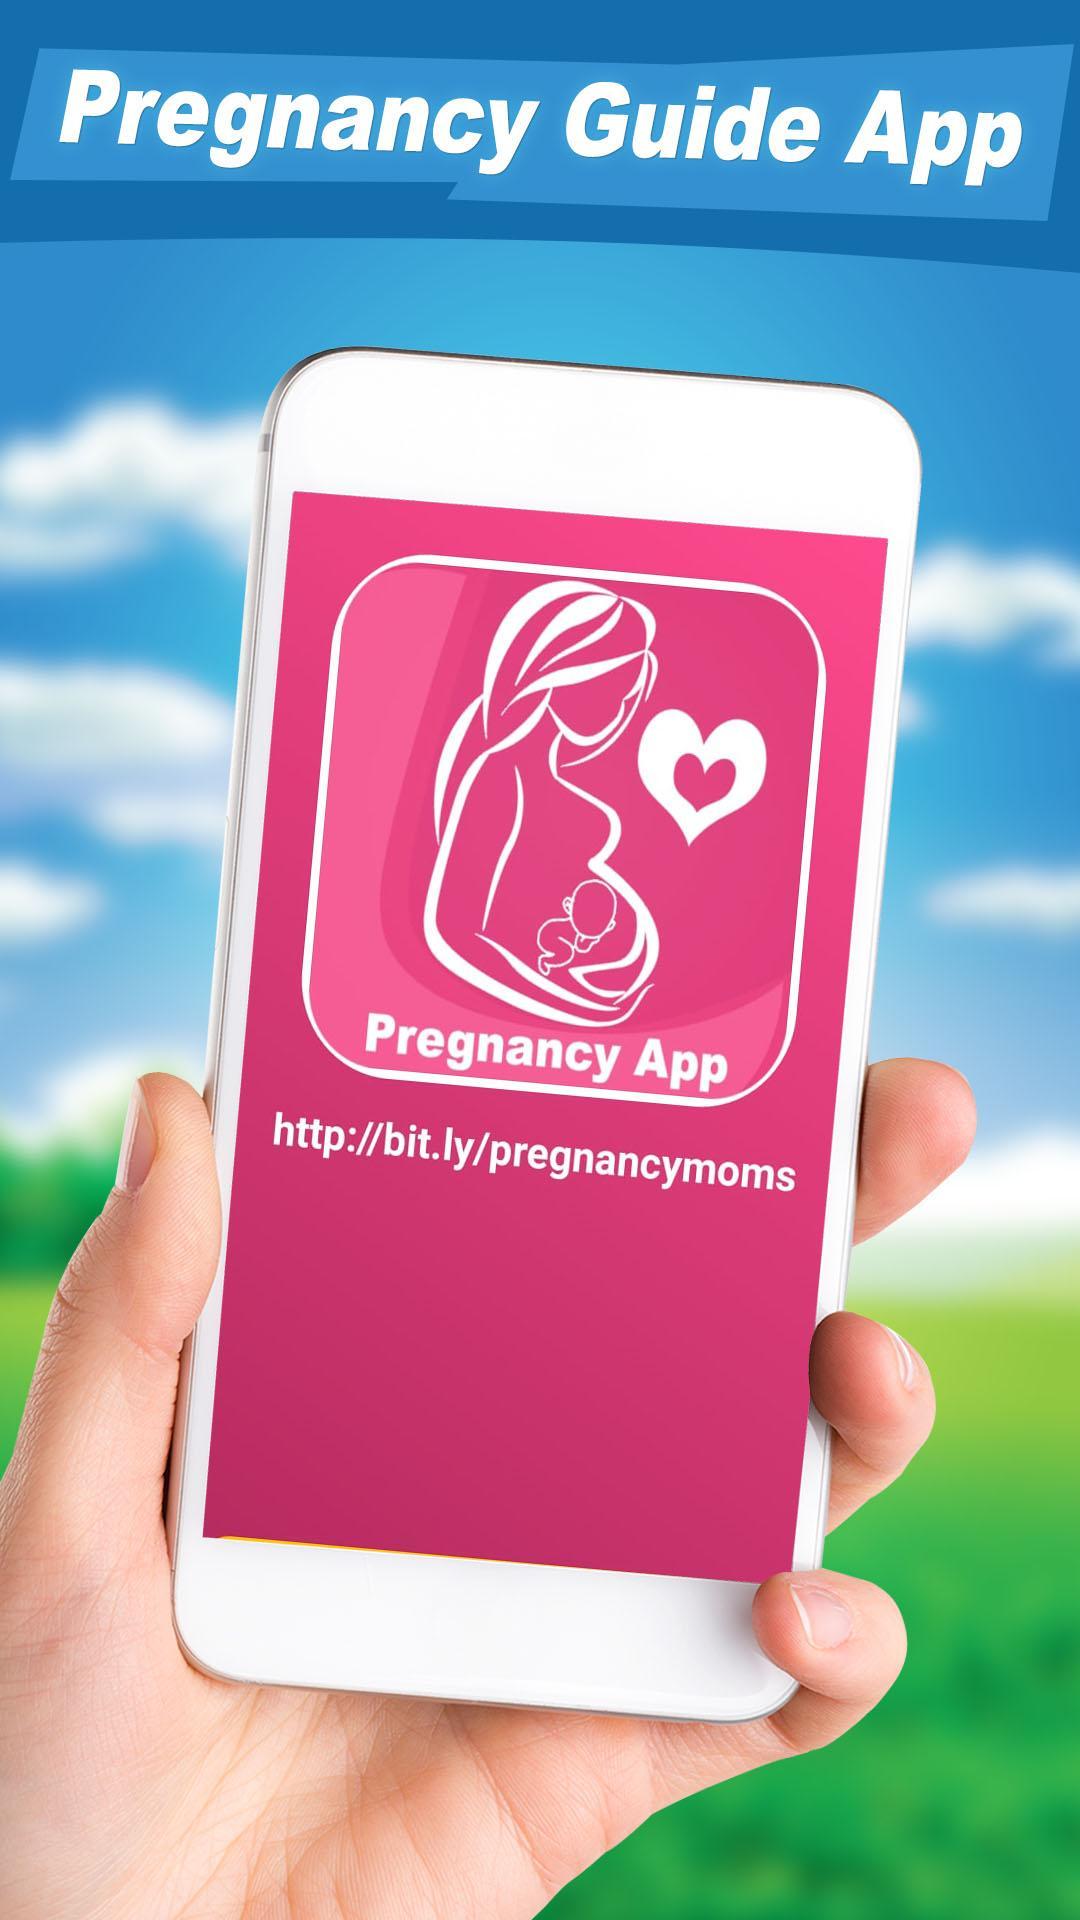 Pregnancy Guide App Pregnancy Guide App 4.0 Screenshot 13